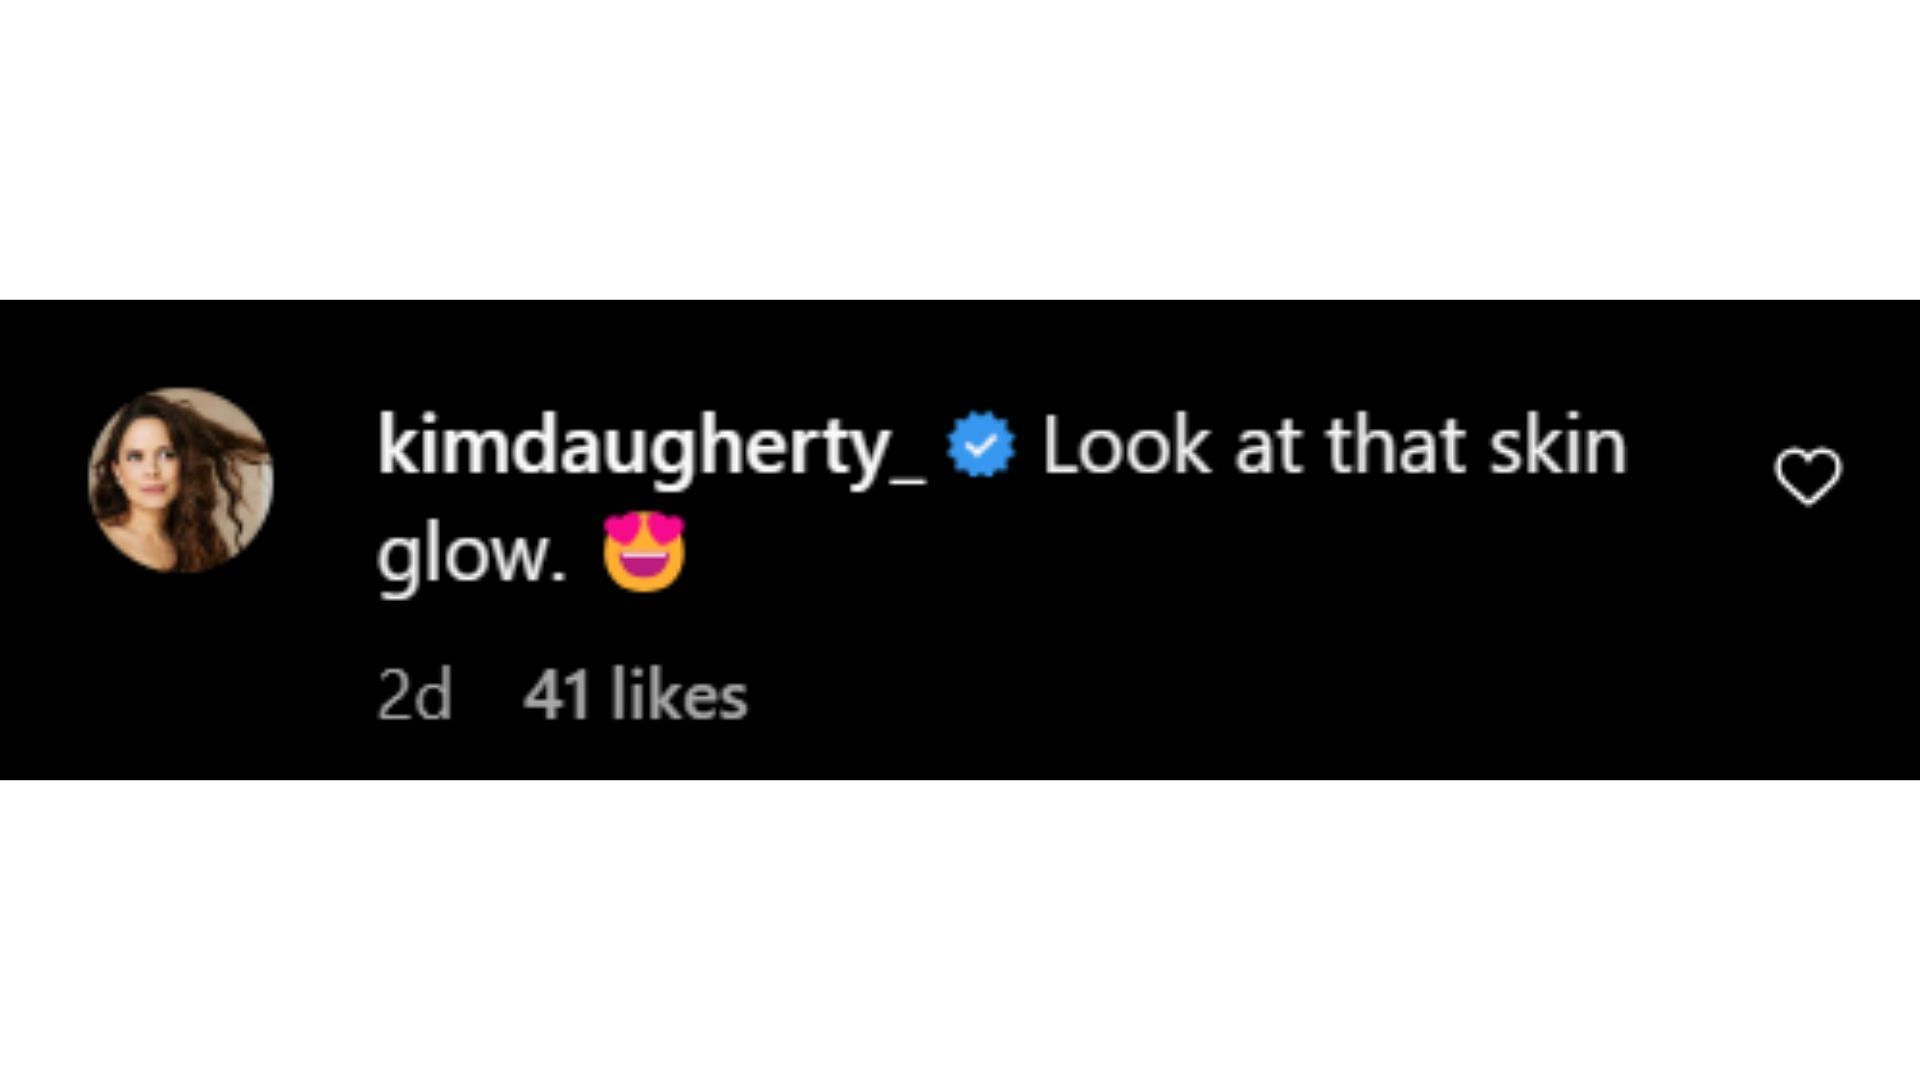 Kim Daugherty reacted to Venessa&#039;s post